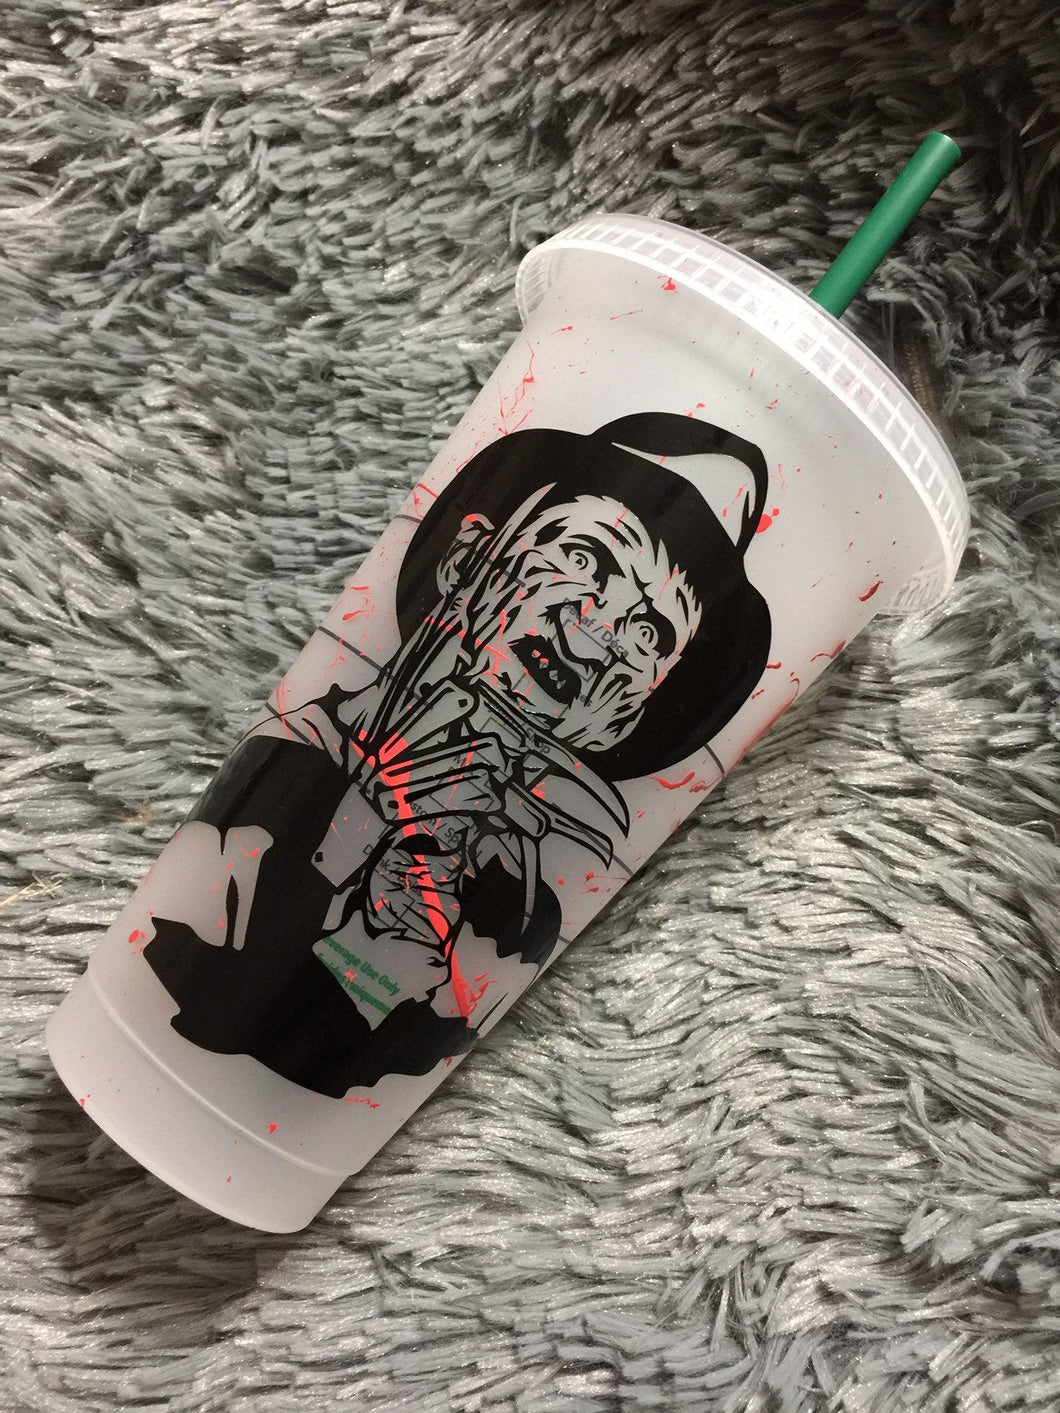 Freddy Krueger Starbucks reusable cold cup from nightmare on elm street